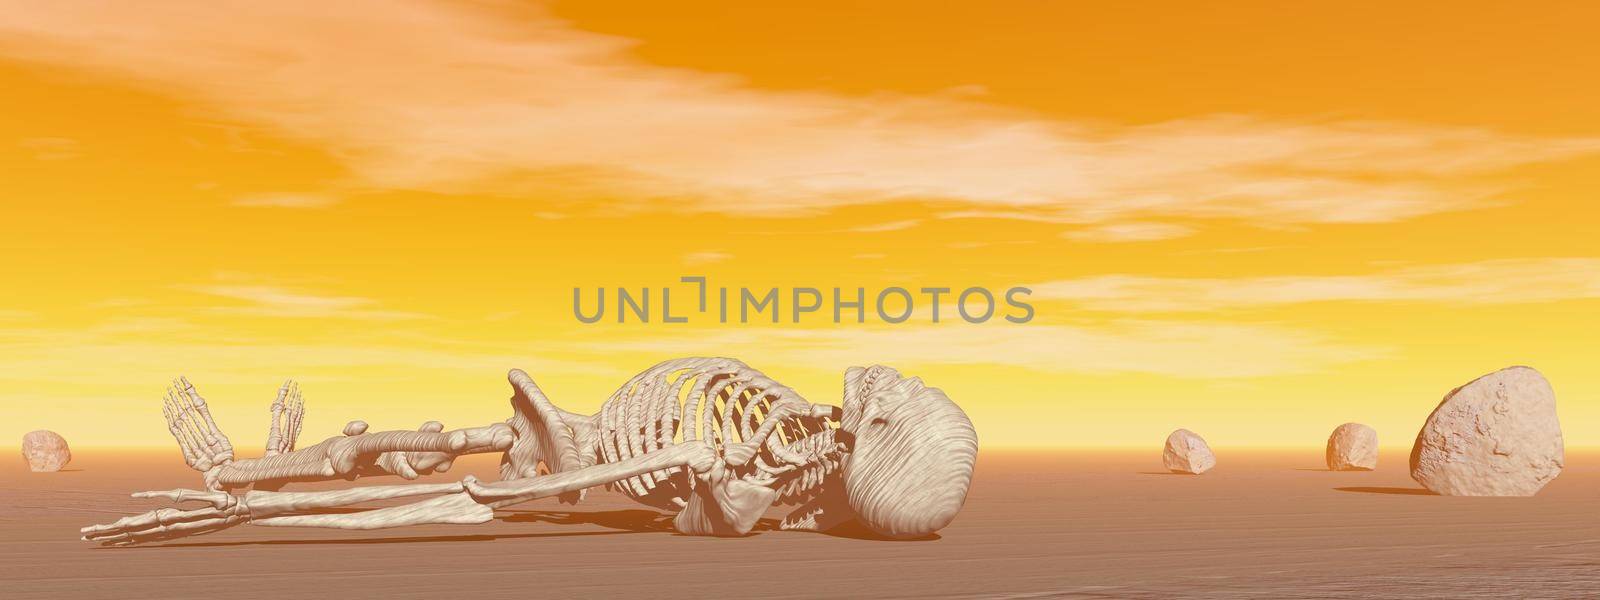 Skeleton lying in the desert next to rocks by hot sunset